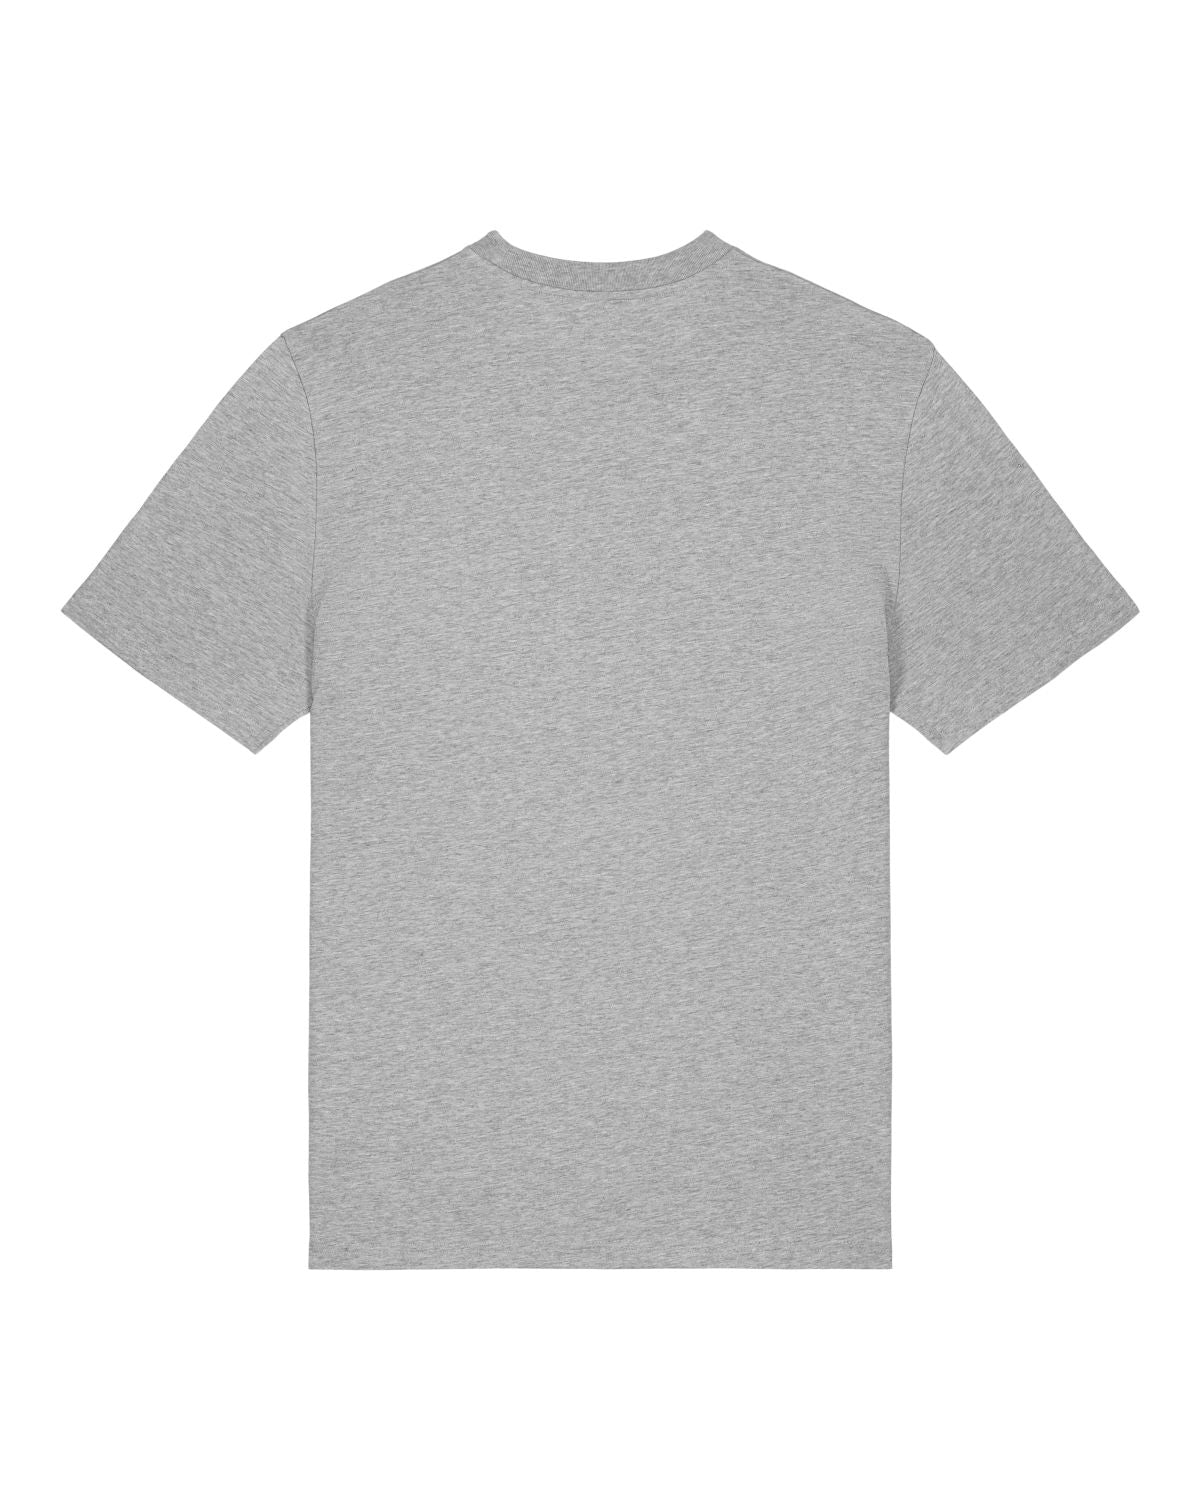 UU Unisex T-shirt - grijs